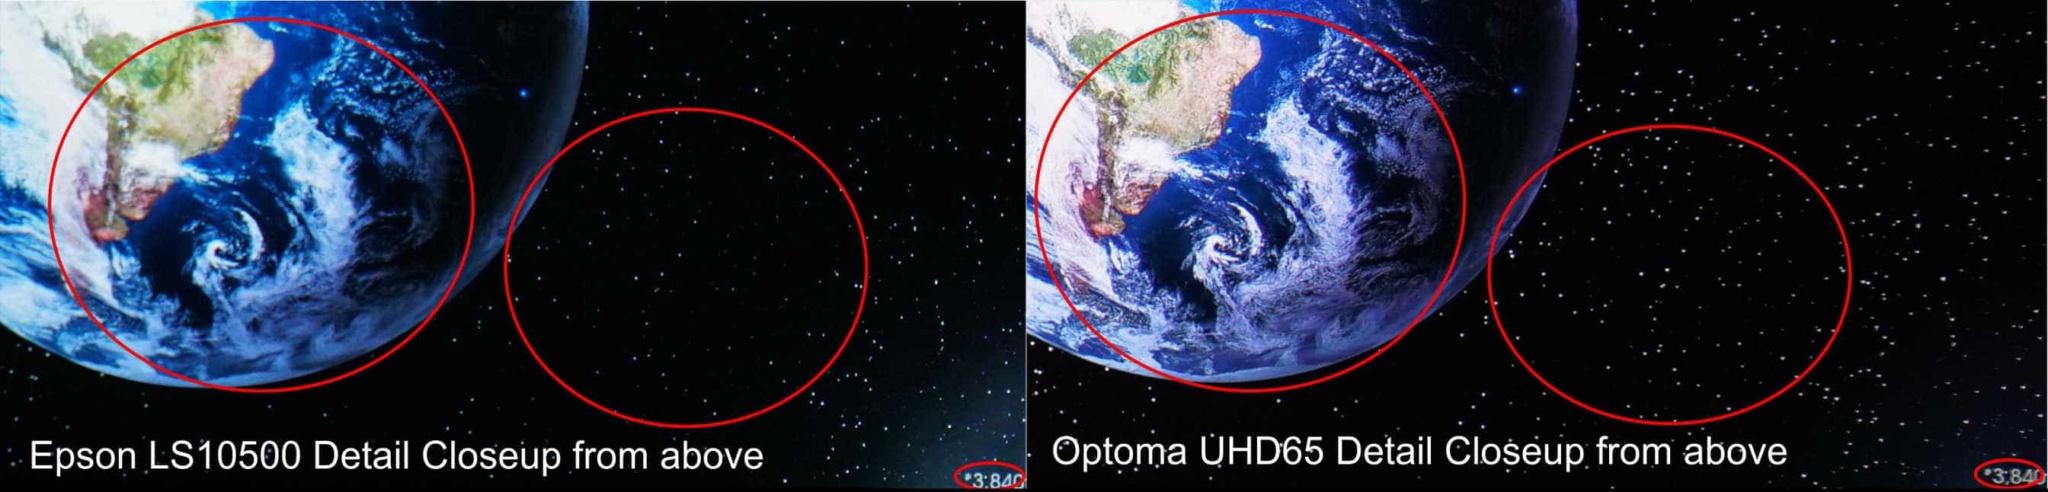 Optoma UHD65 vs Epson Pro Cinema LS10500: Detail Closeup